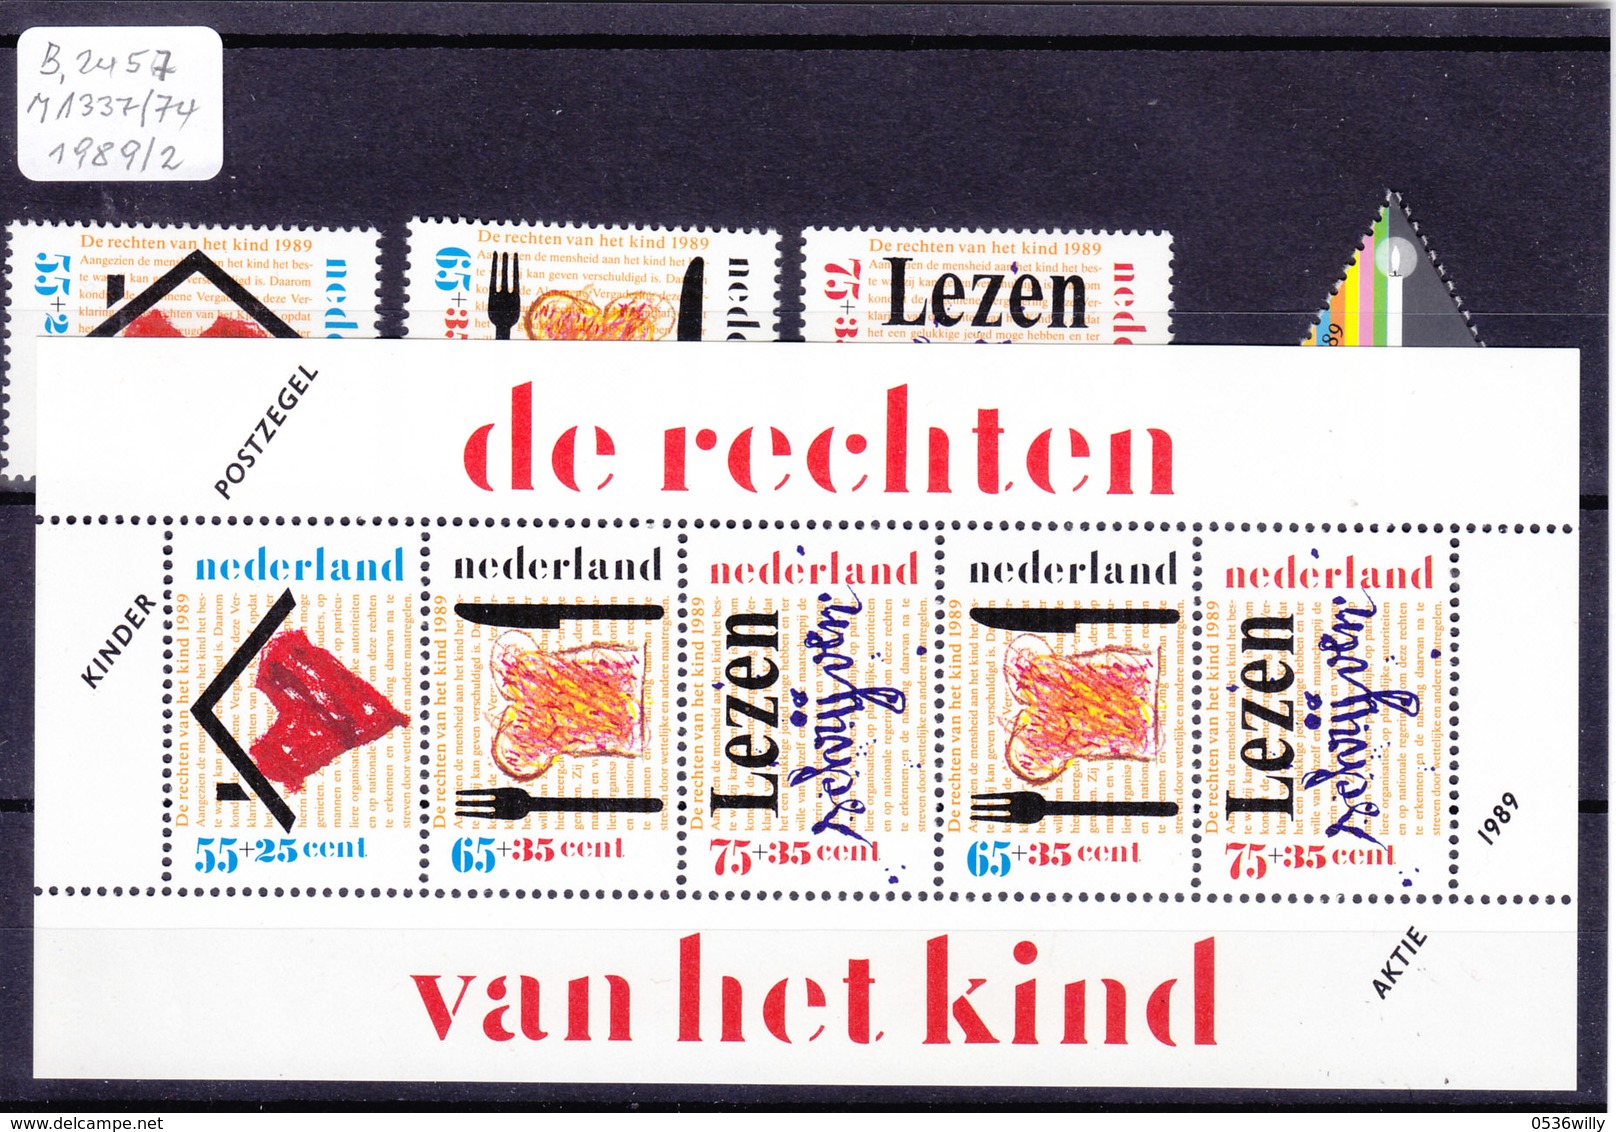 NL-Niederlande Ausgaben 1989 Komplett (B.2457) - Années Complètes